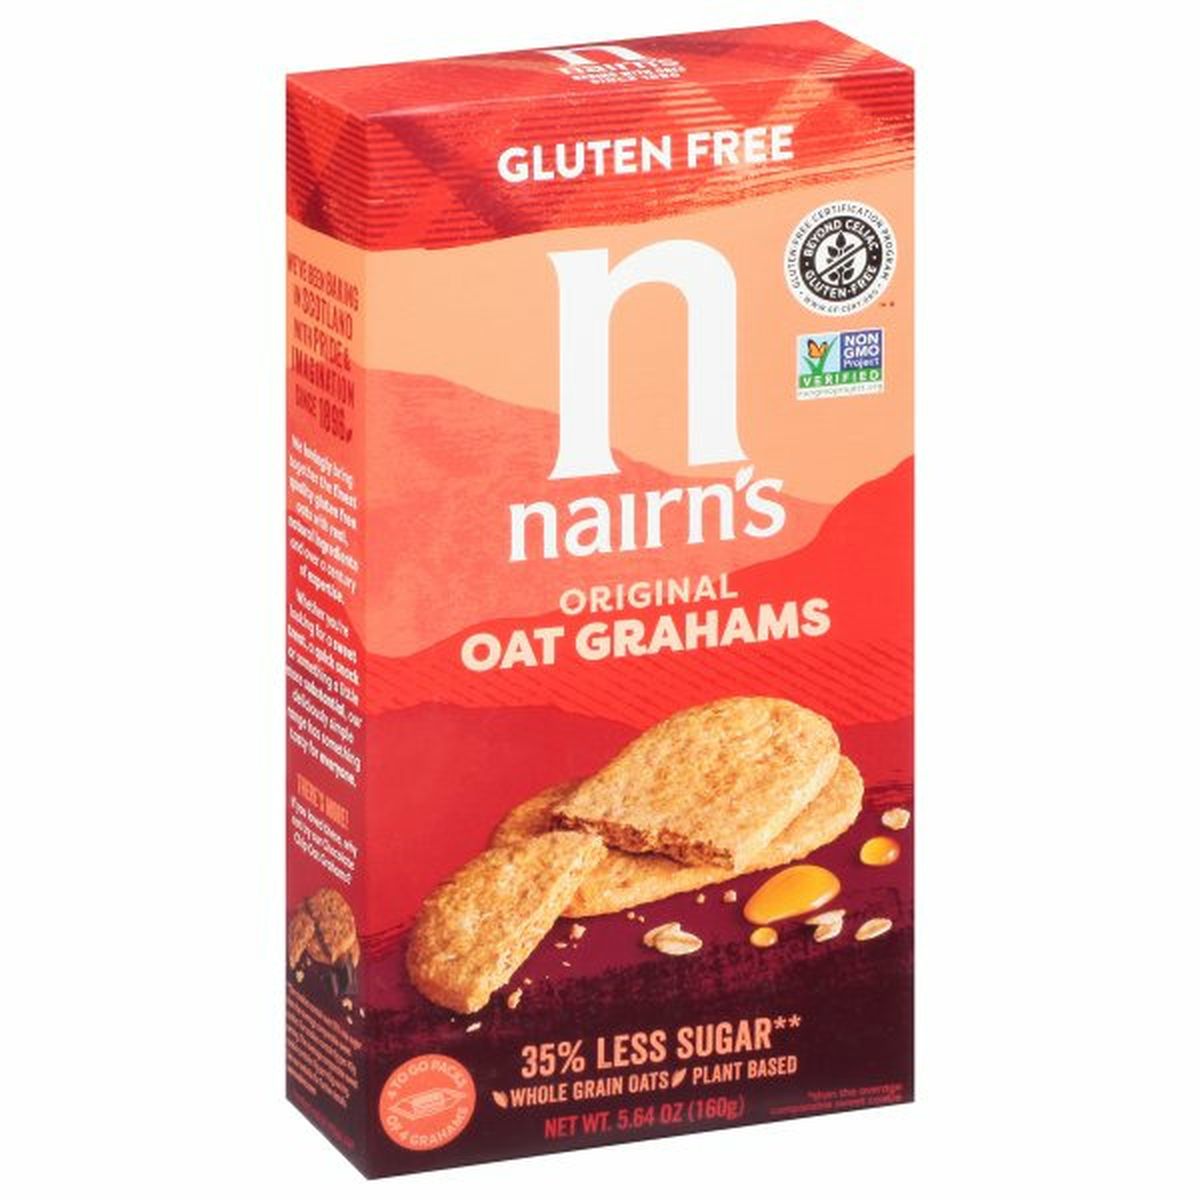 Calories in Nairn's Oat Grahams, Gluten Free, Original